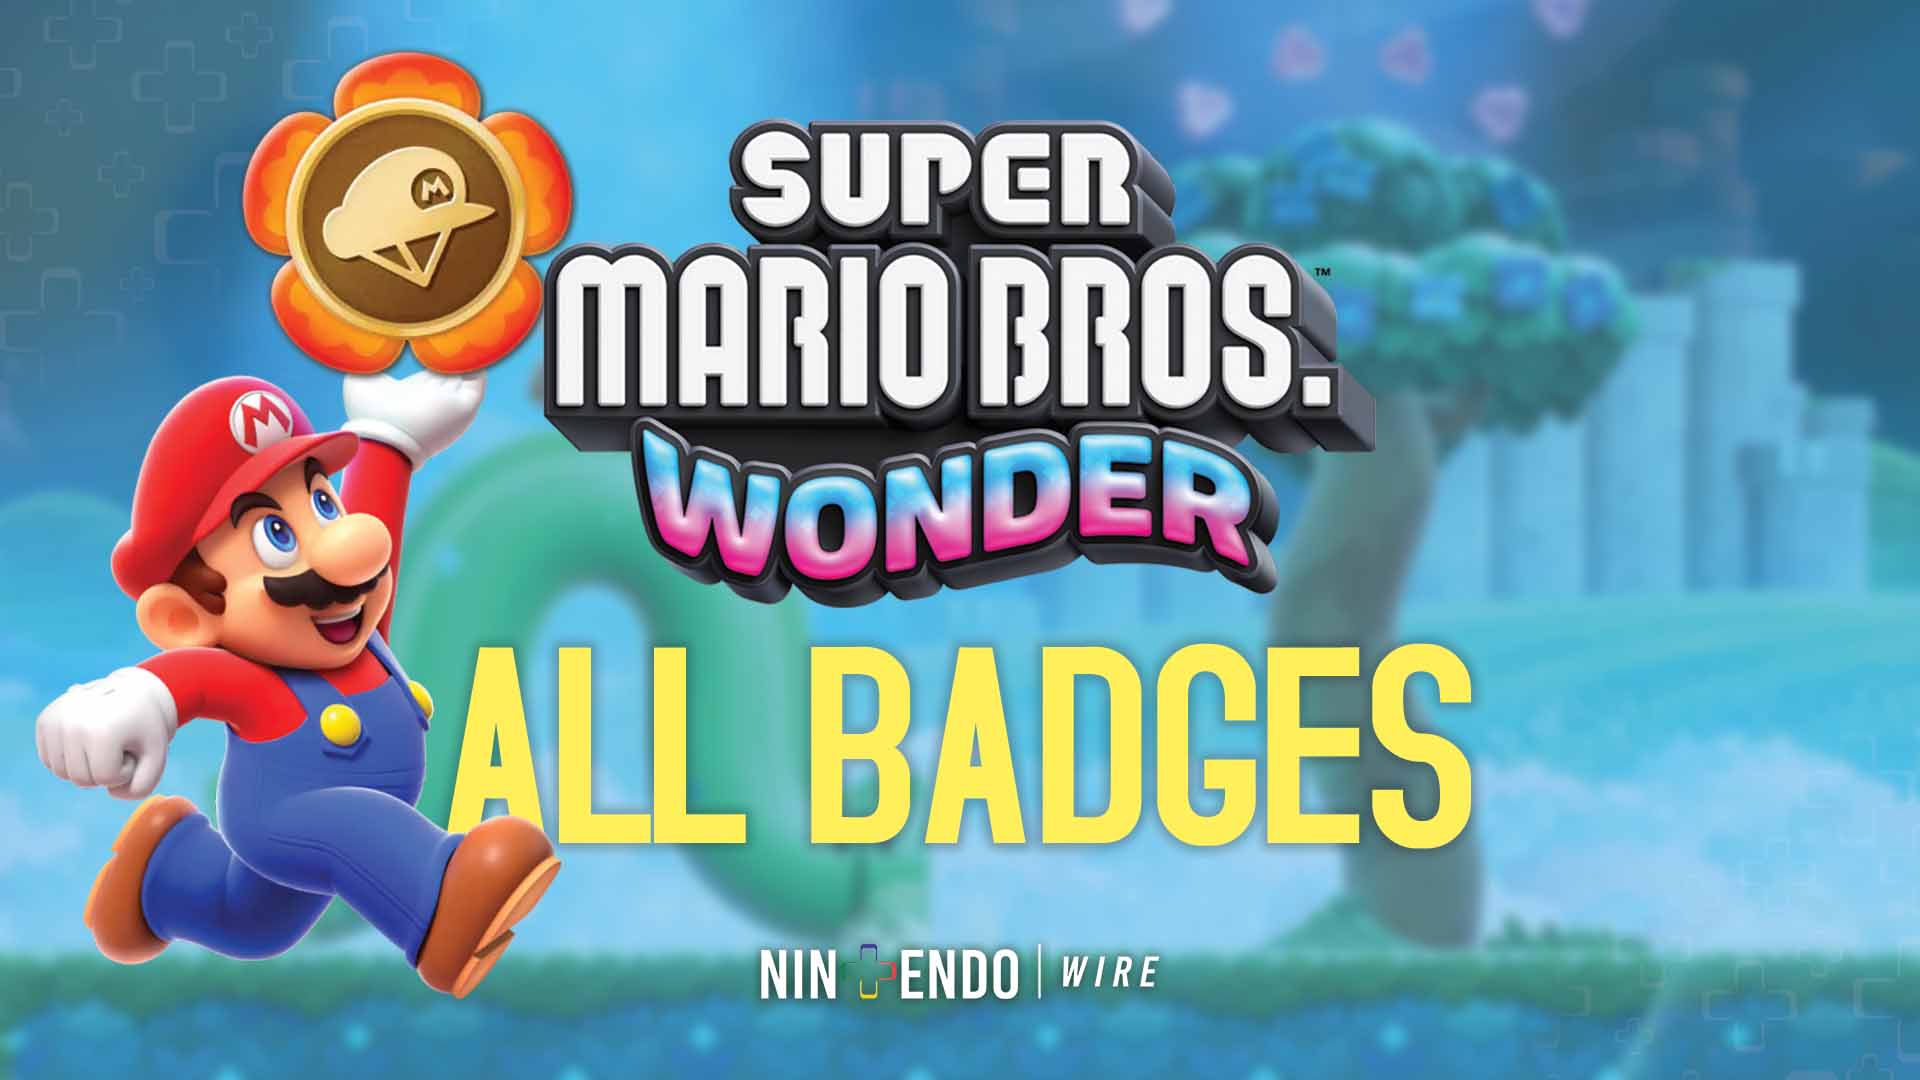 List of Badges - Super Mario Bros. Wonder Guide - IGN